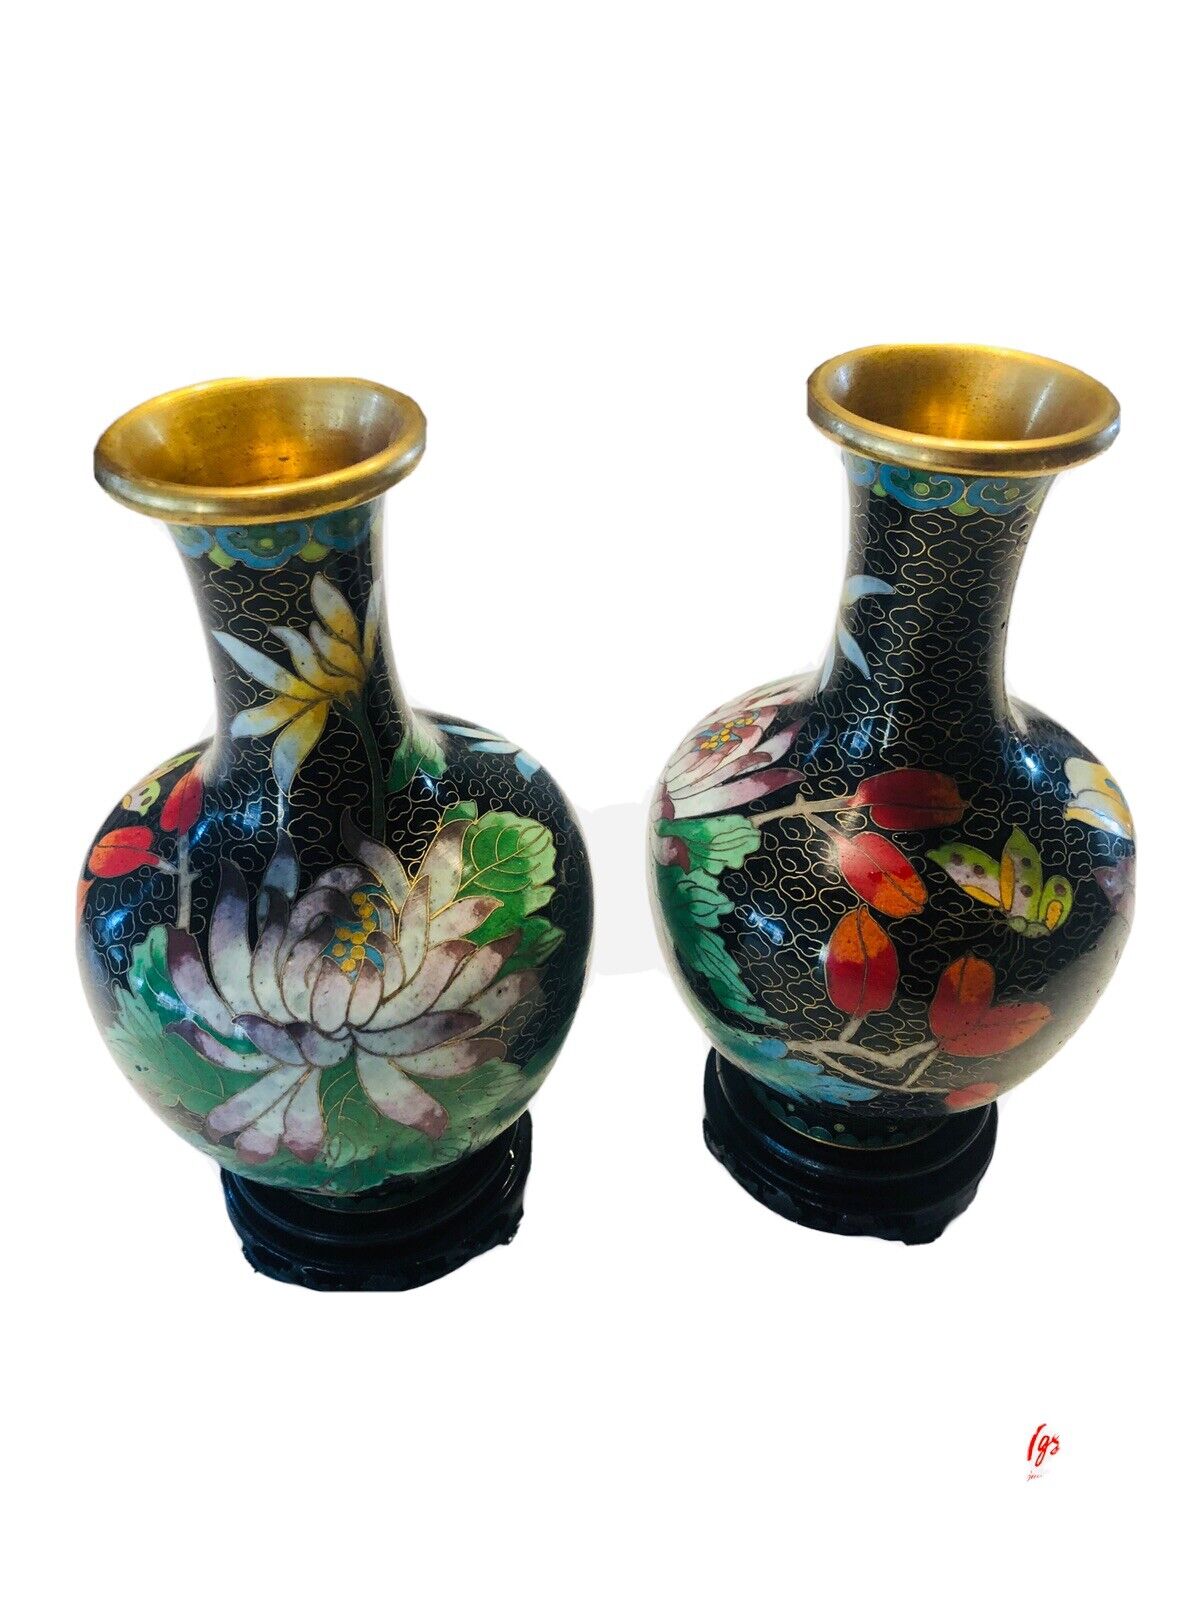 Lovely Pair of Vintage Chinese Floral Cloisonne Enamel Vases - Gilt Brass Metal